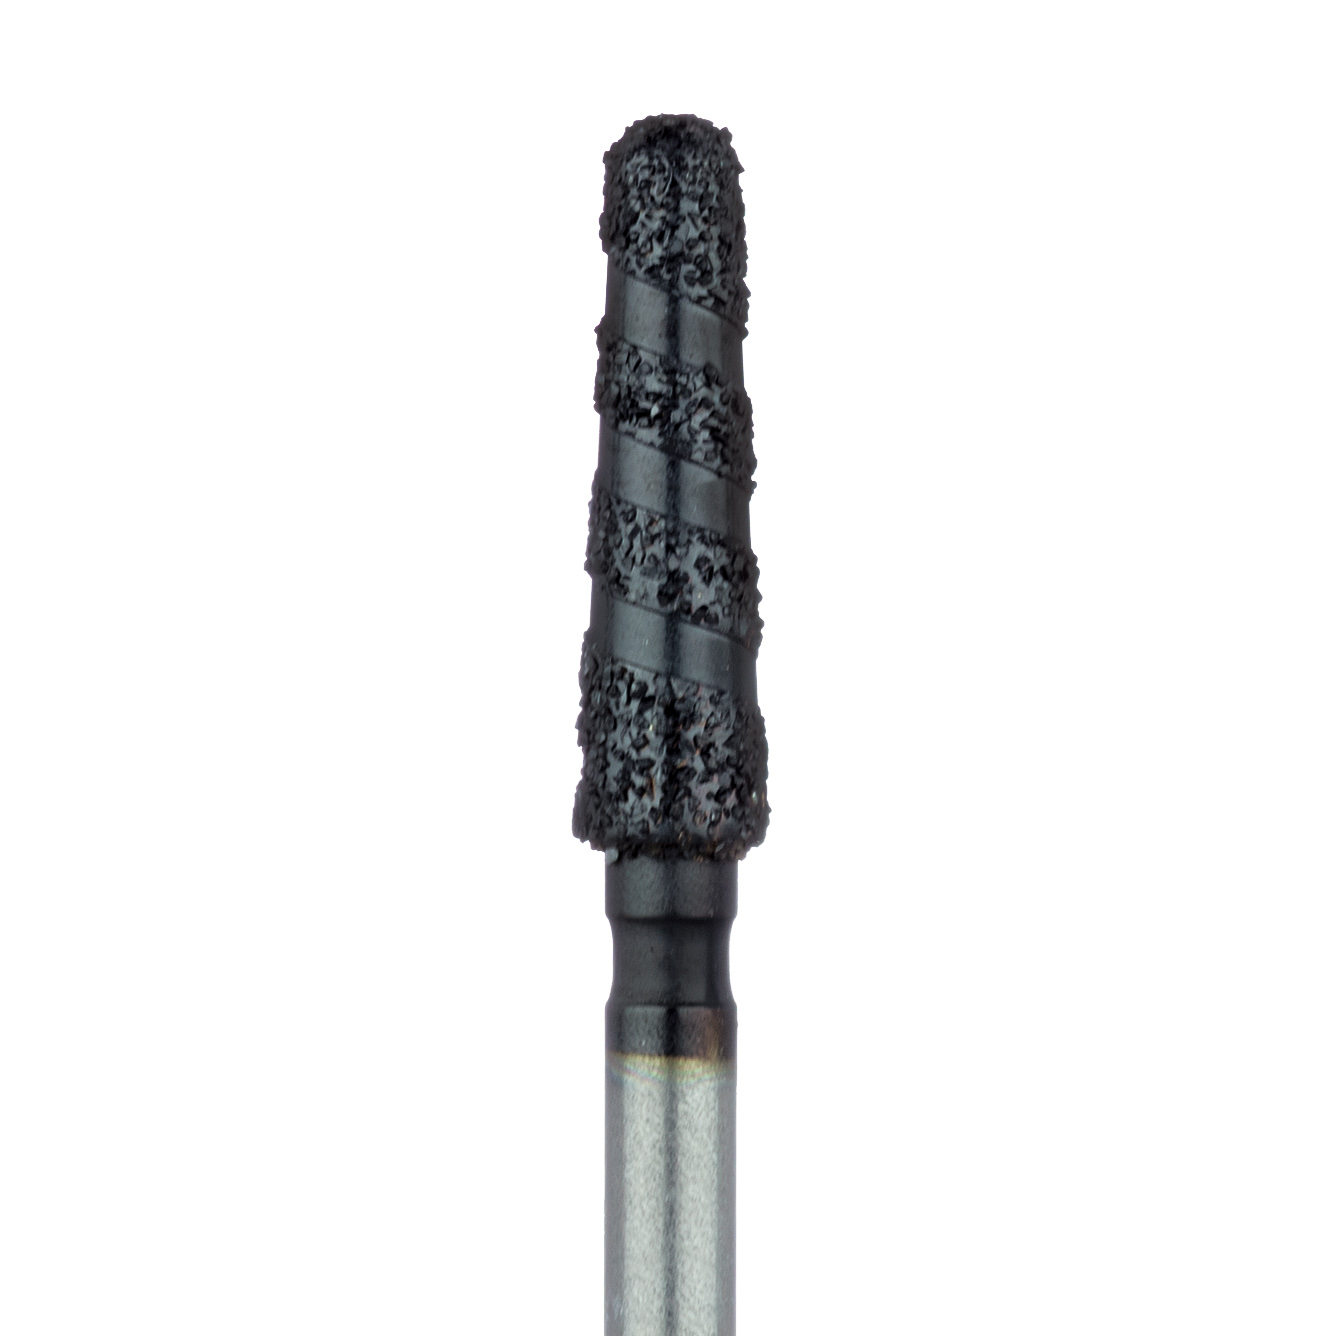 B850-025-FG Black Cobra Diamond Bur, Super Coarse Grit, Round end taper, 2.5mm, FG